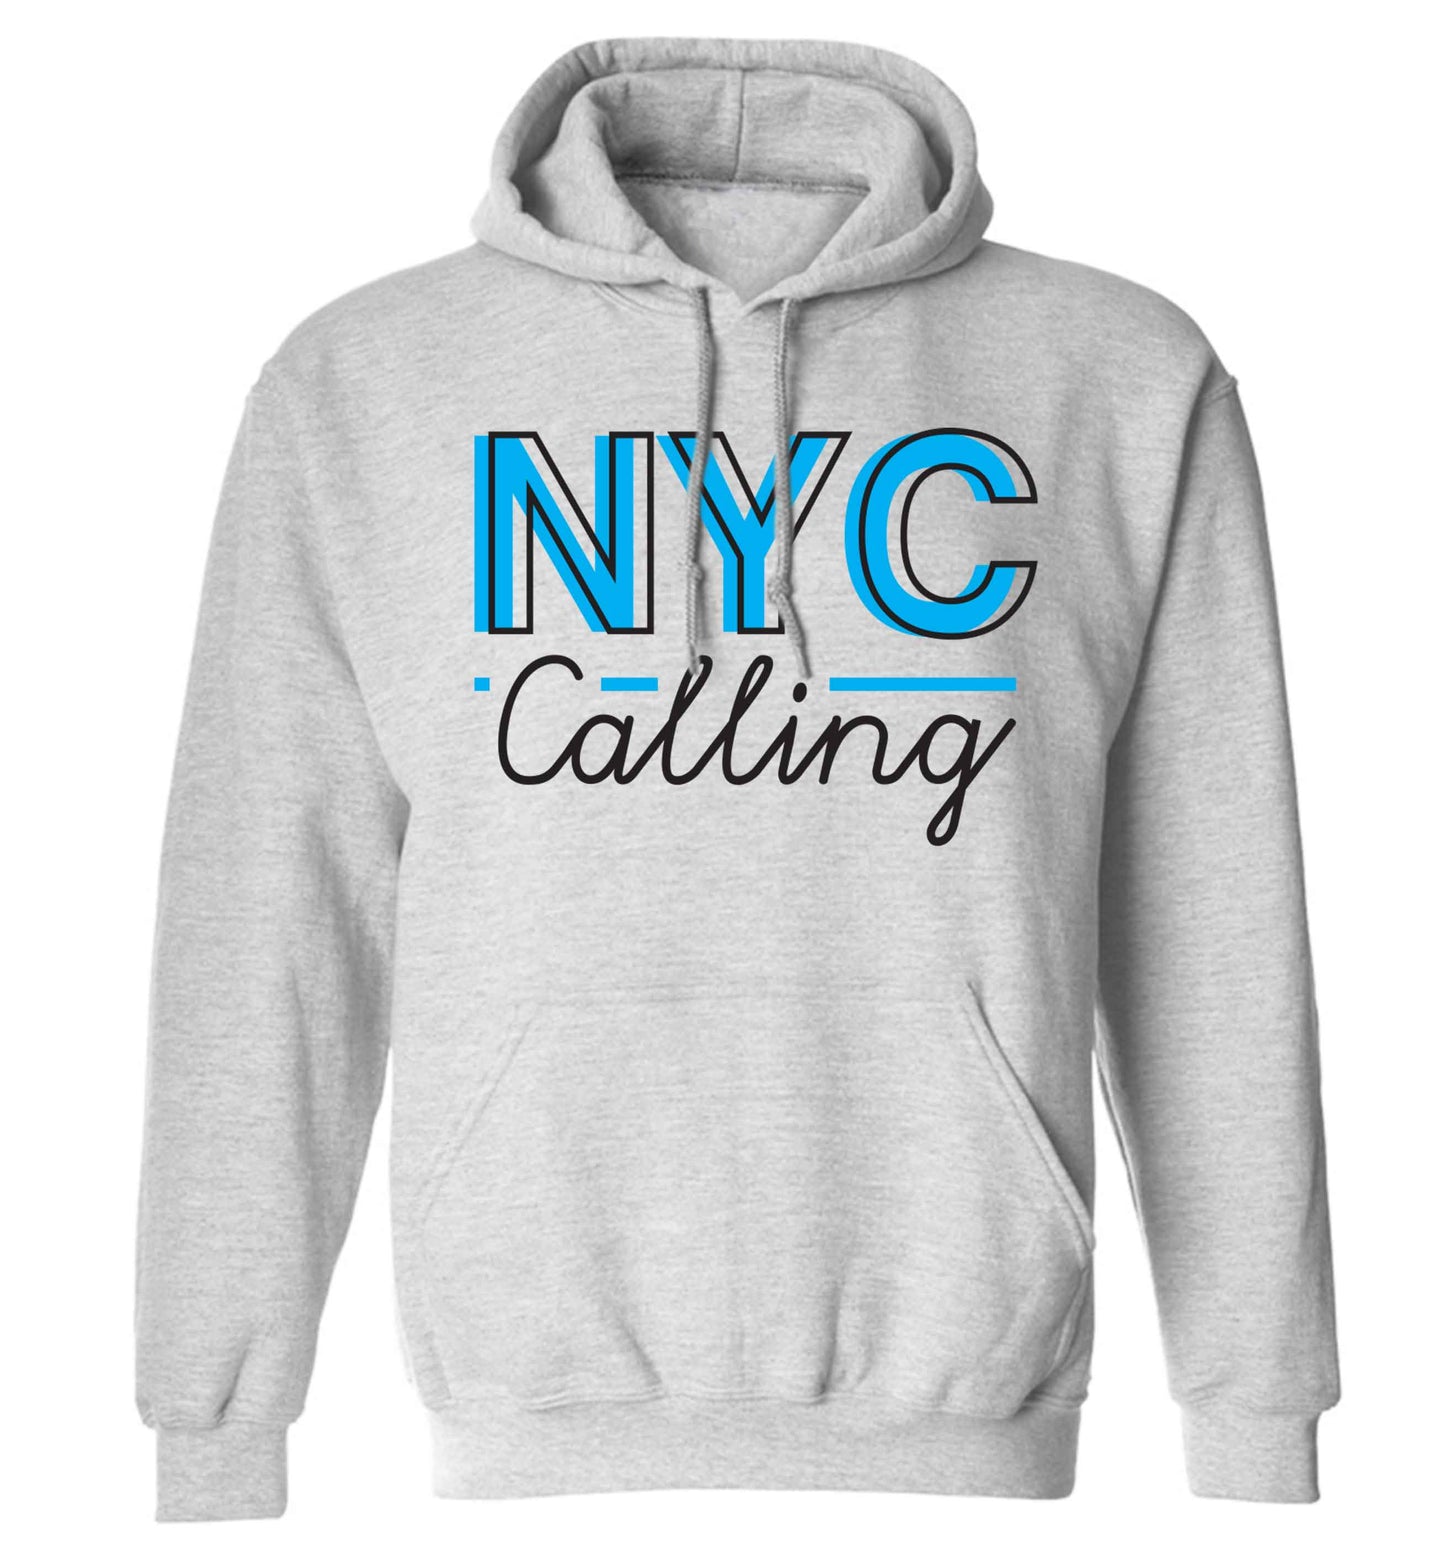 NYC calling adults unisex grey hoodie 2XL